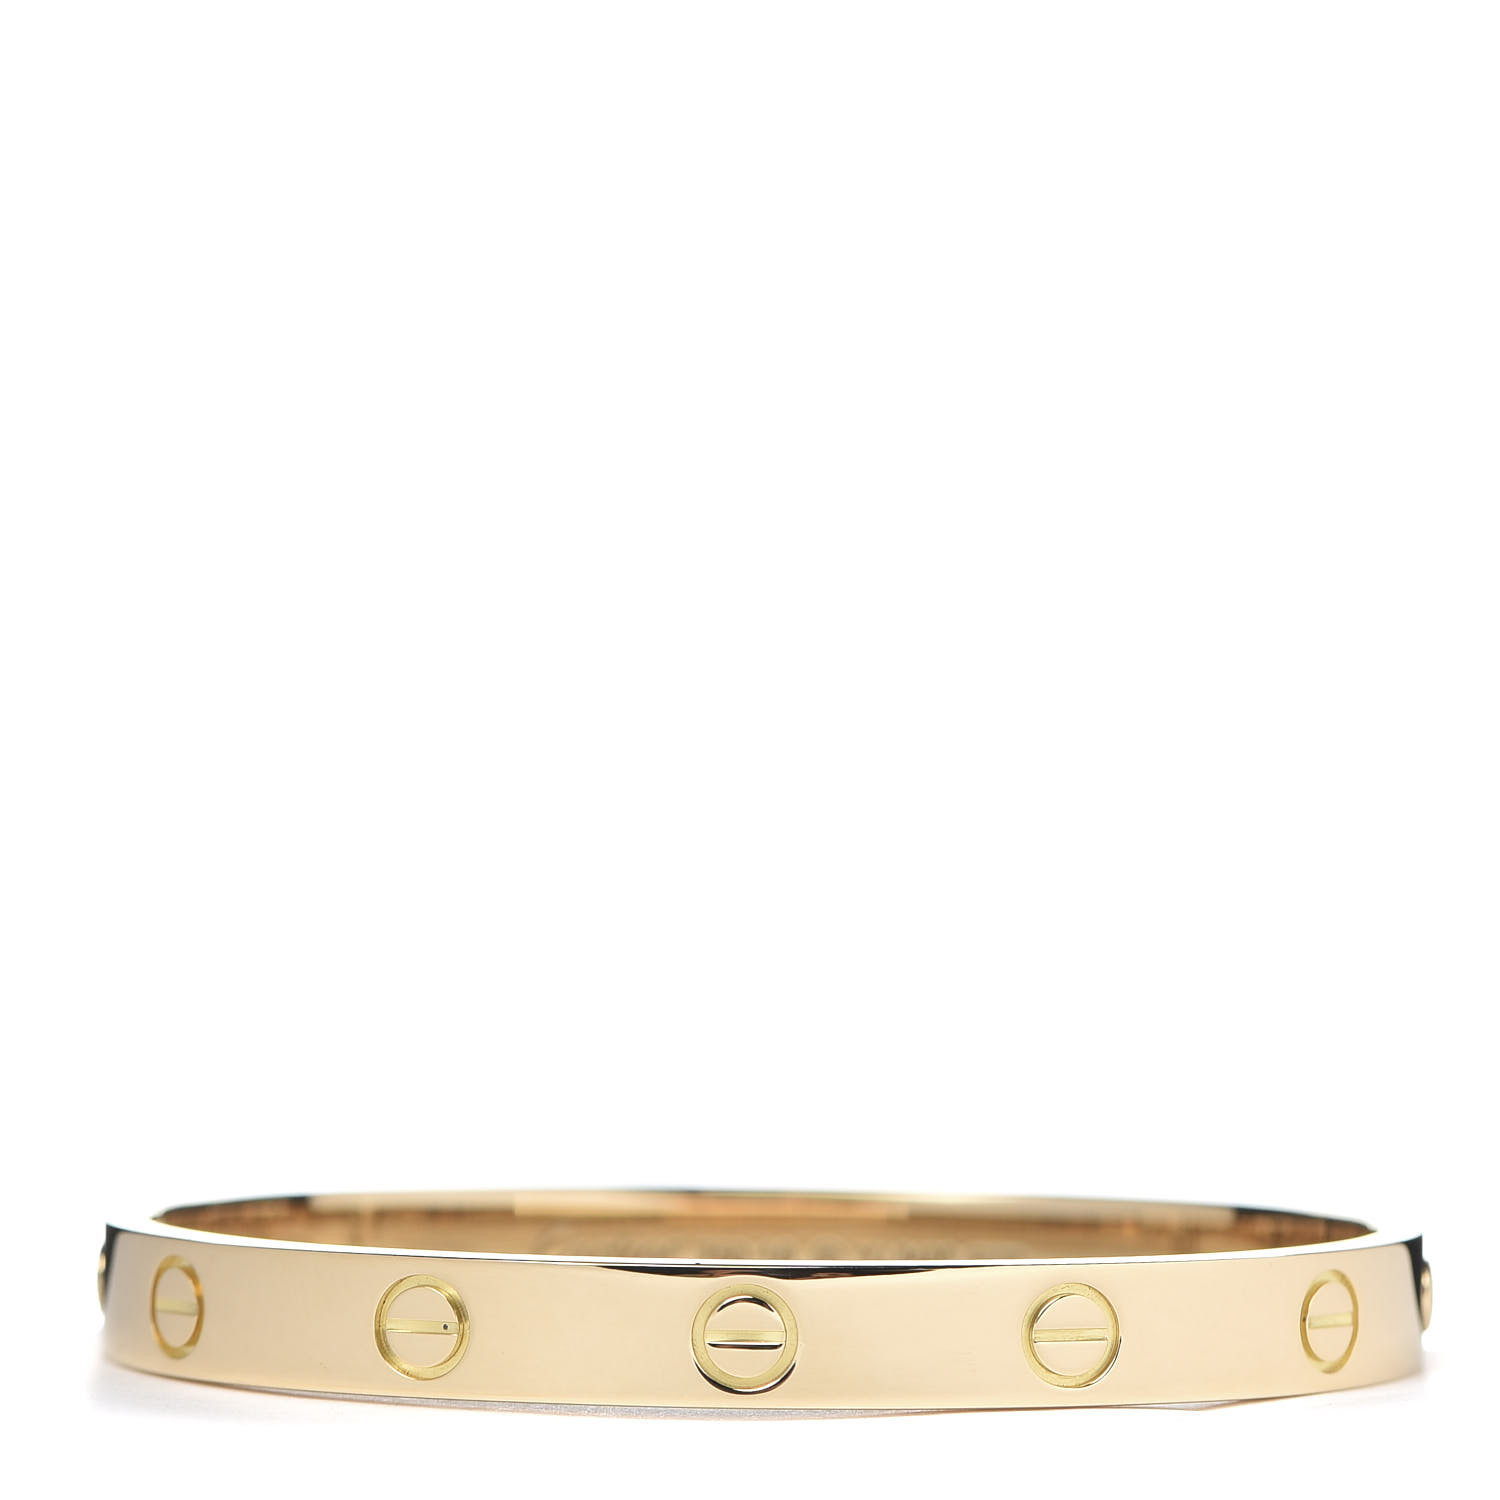 cartier love bracelet yellow gold size 16